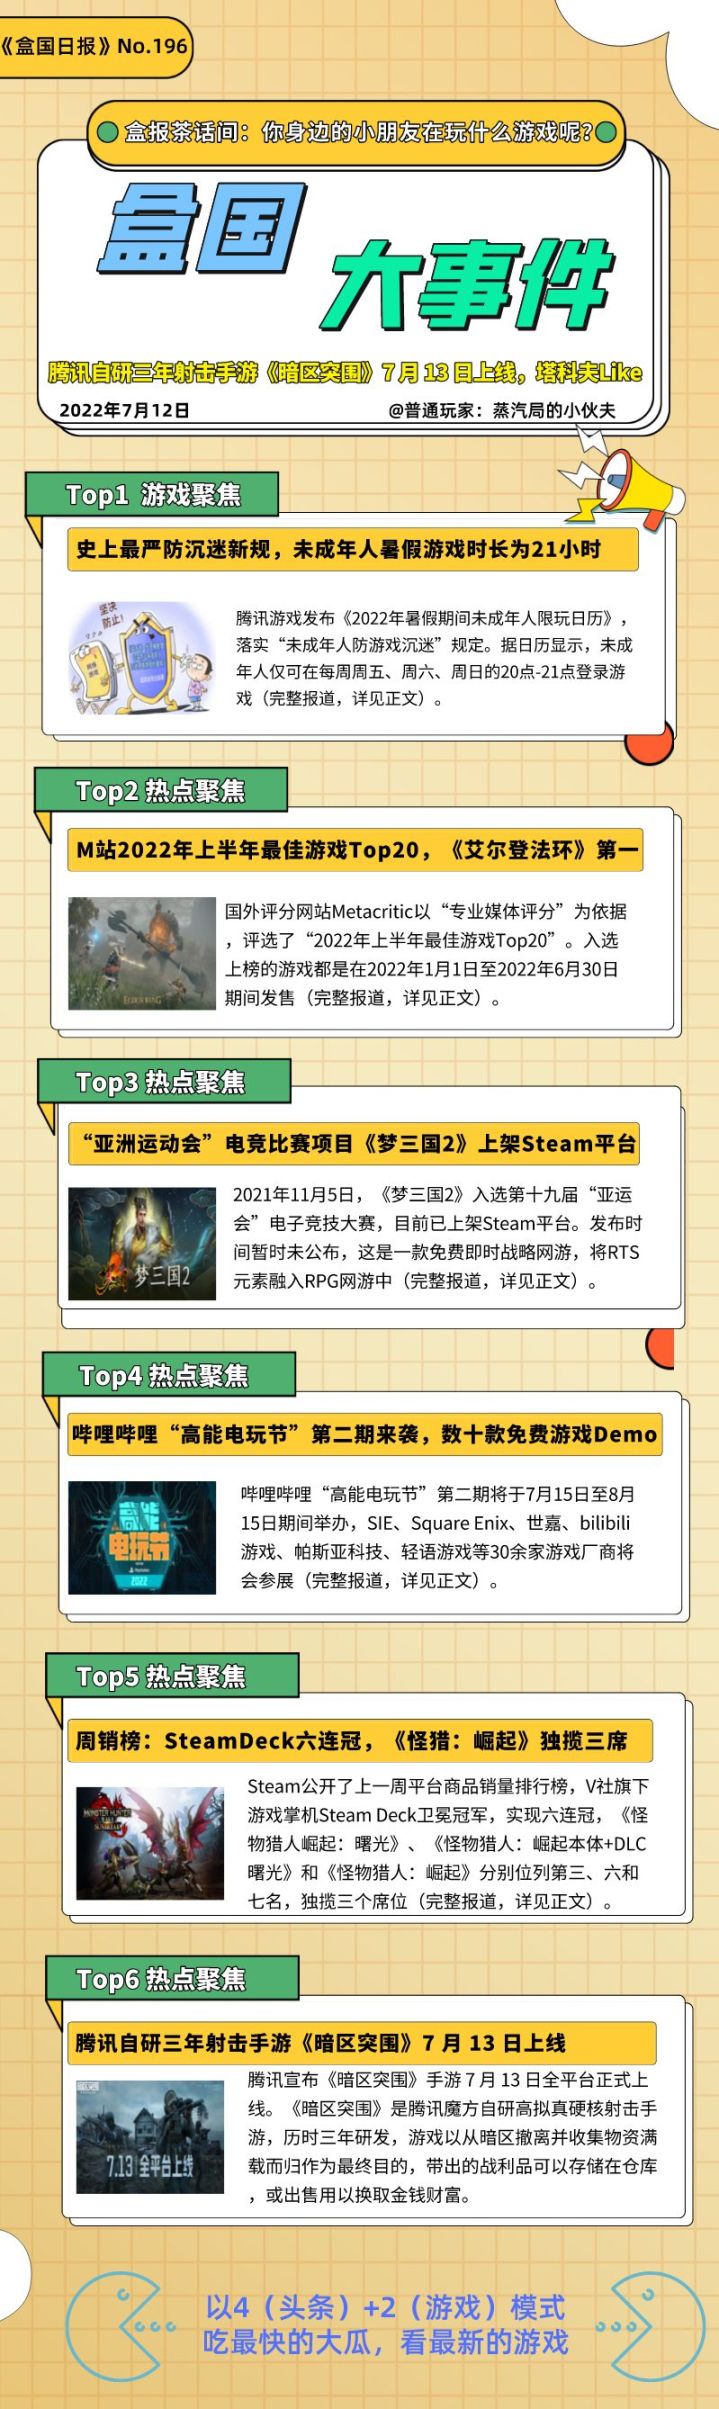 【PC遊戲】盒國日報|未成年人暑假遊戲時長為21小時；2022年上半年最佳遊戲Top20-M站